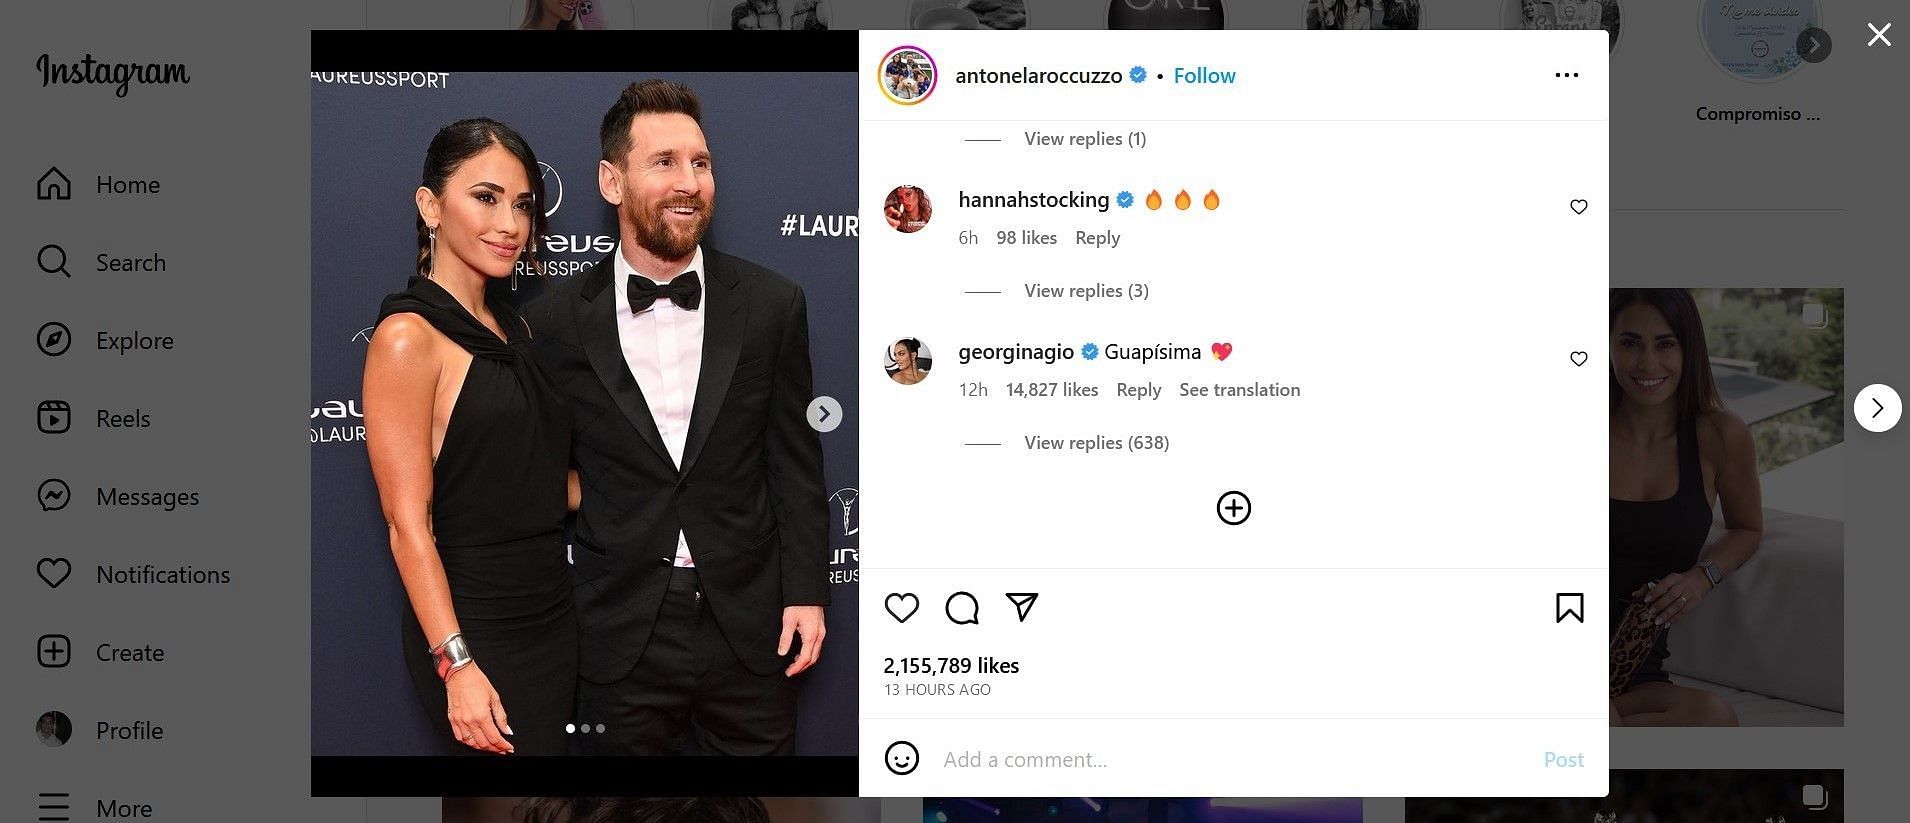 Messi's wife Antonella reacts to Georgina Rodriguez's stunning